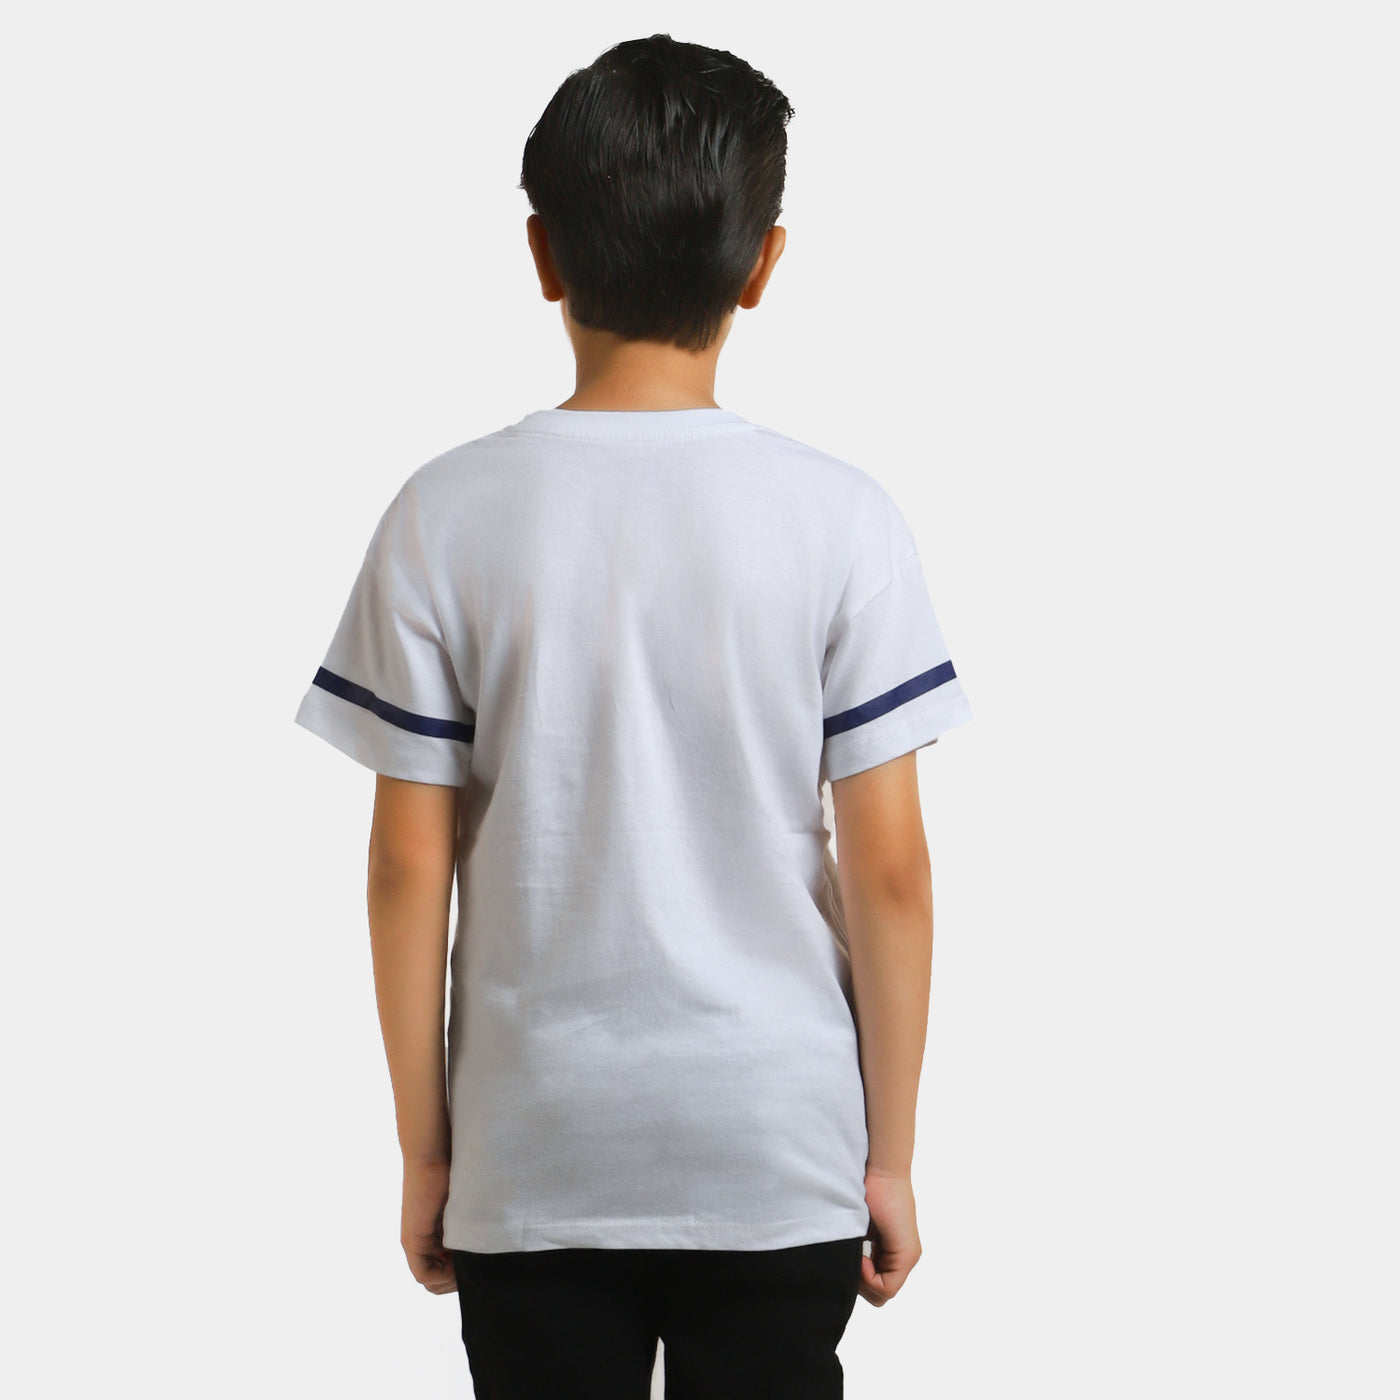 Boys Cotton T-Shirt Character - White